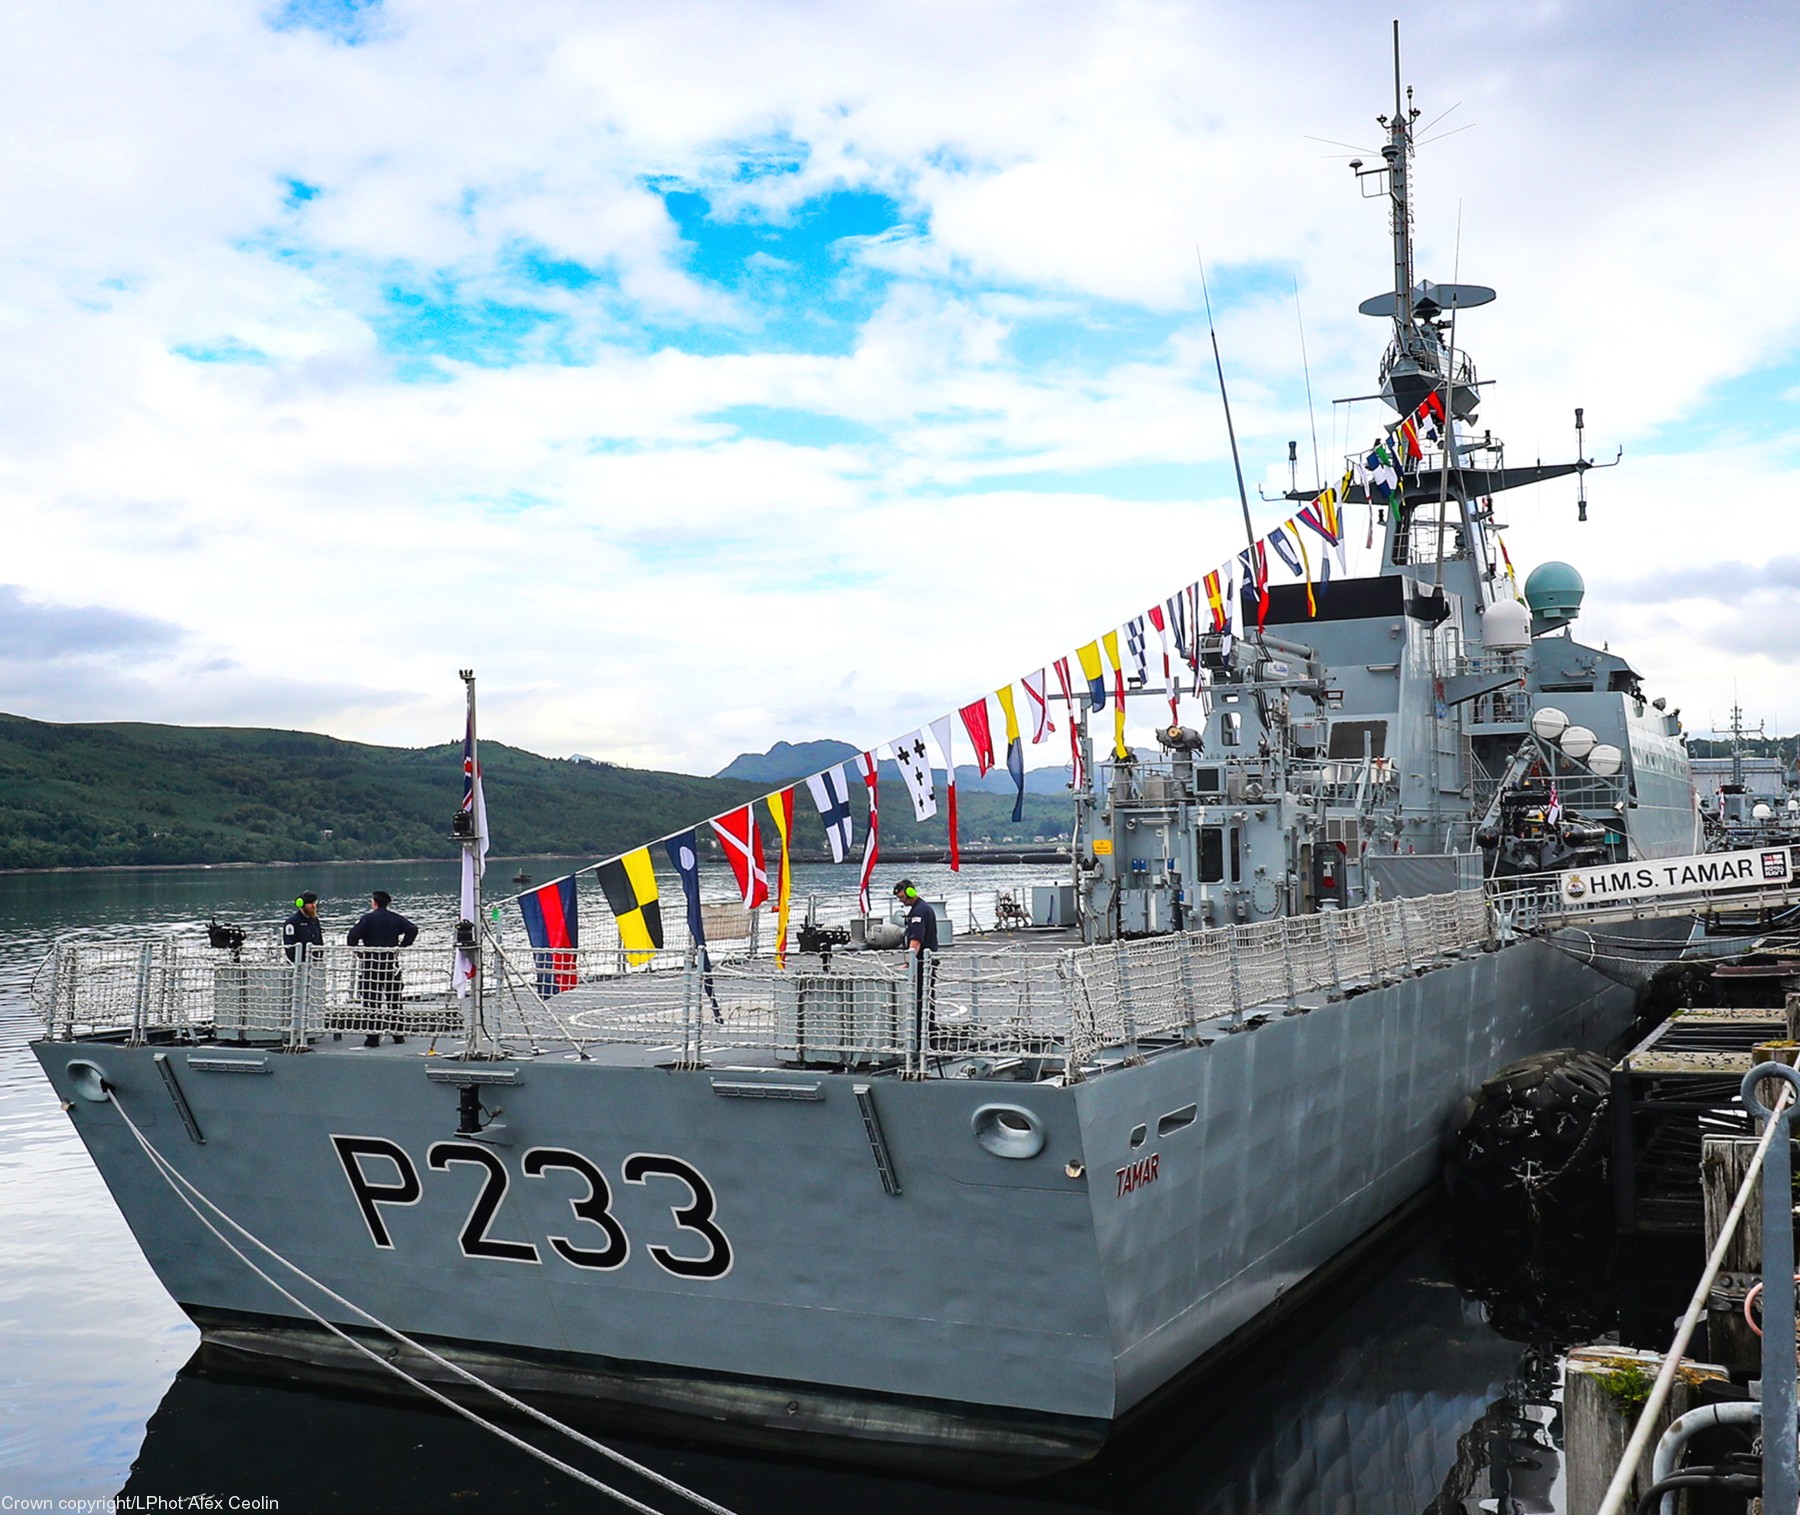 p-233 hms tamar river class offshore patrol vessel opv royal navy 14